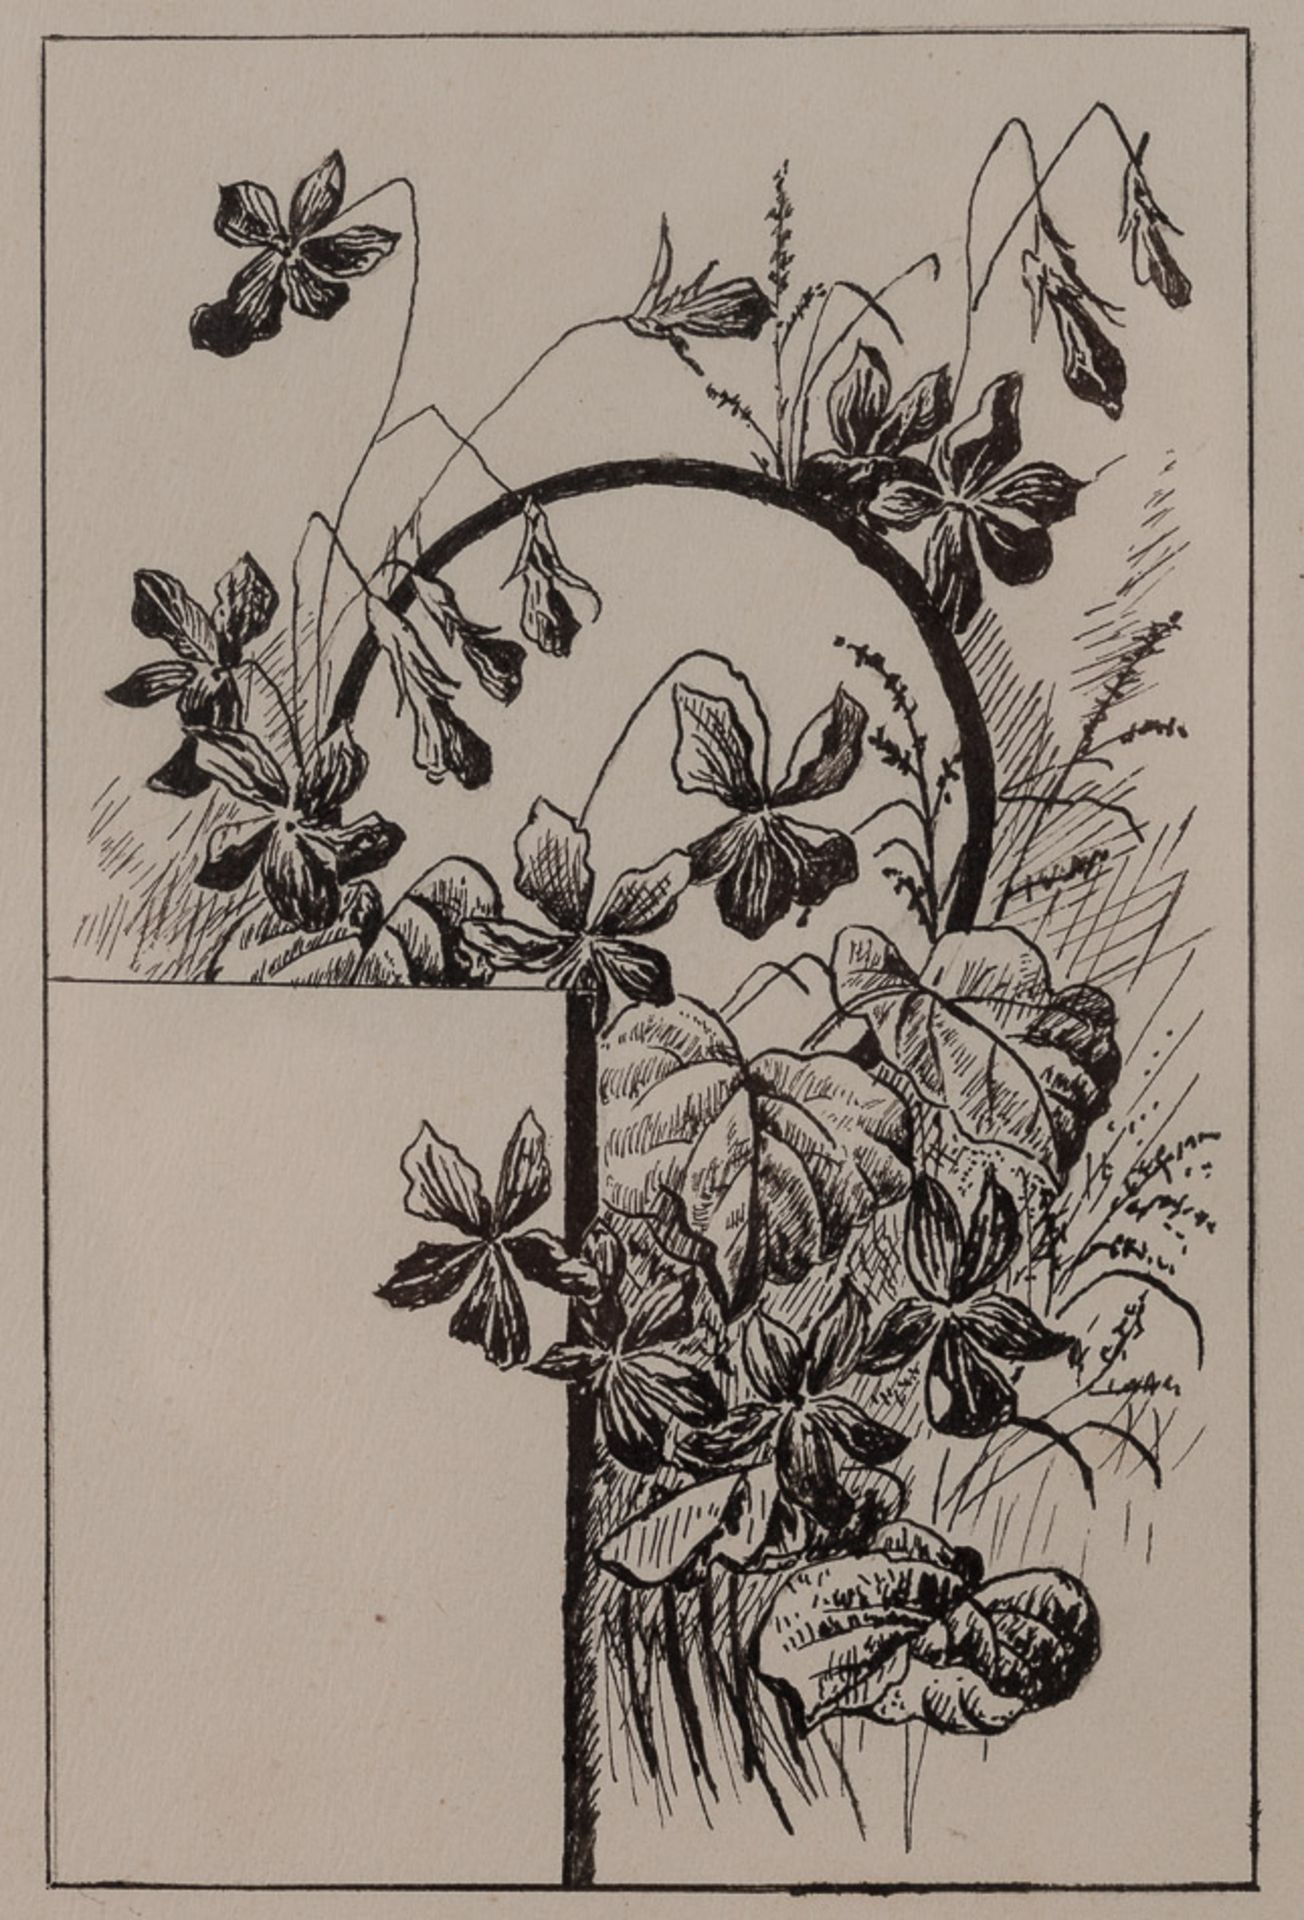 L.Windinger 20. Jhd."Blumen"
Zeichnung, Tinte-Feder, 22 cm x 16 cm,
rechts unten signiert, datiert